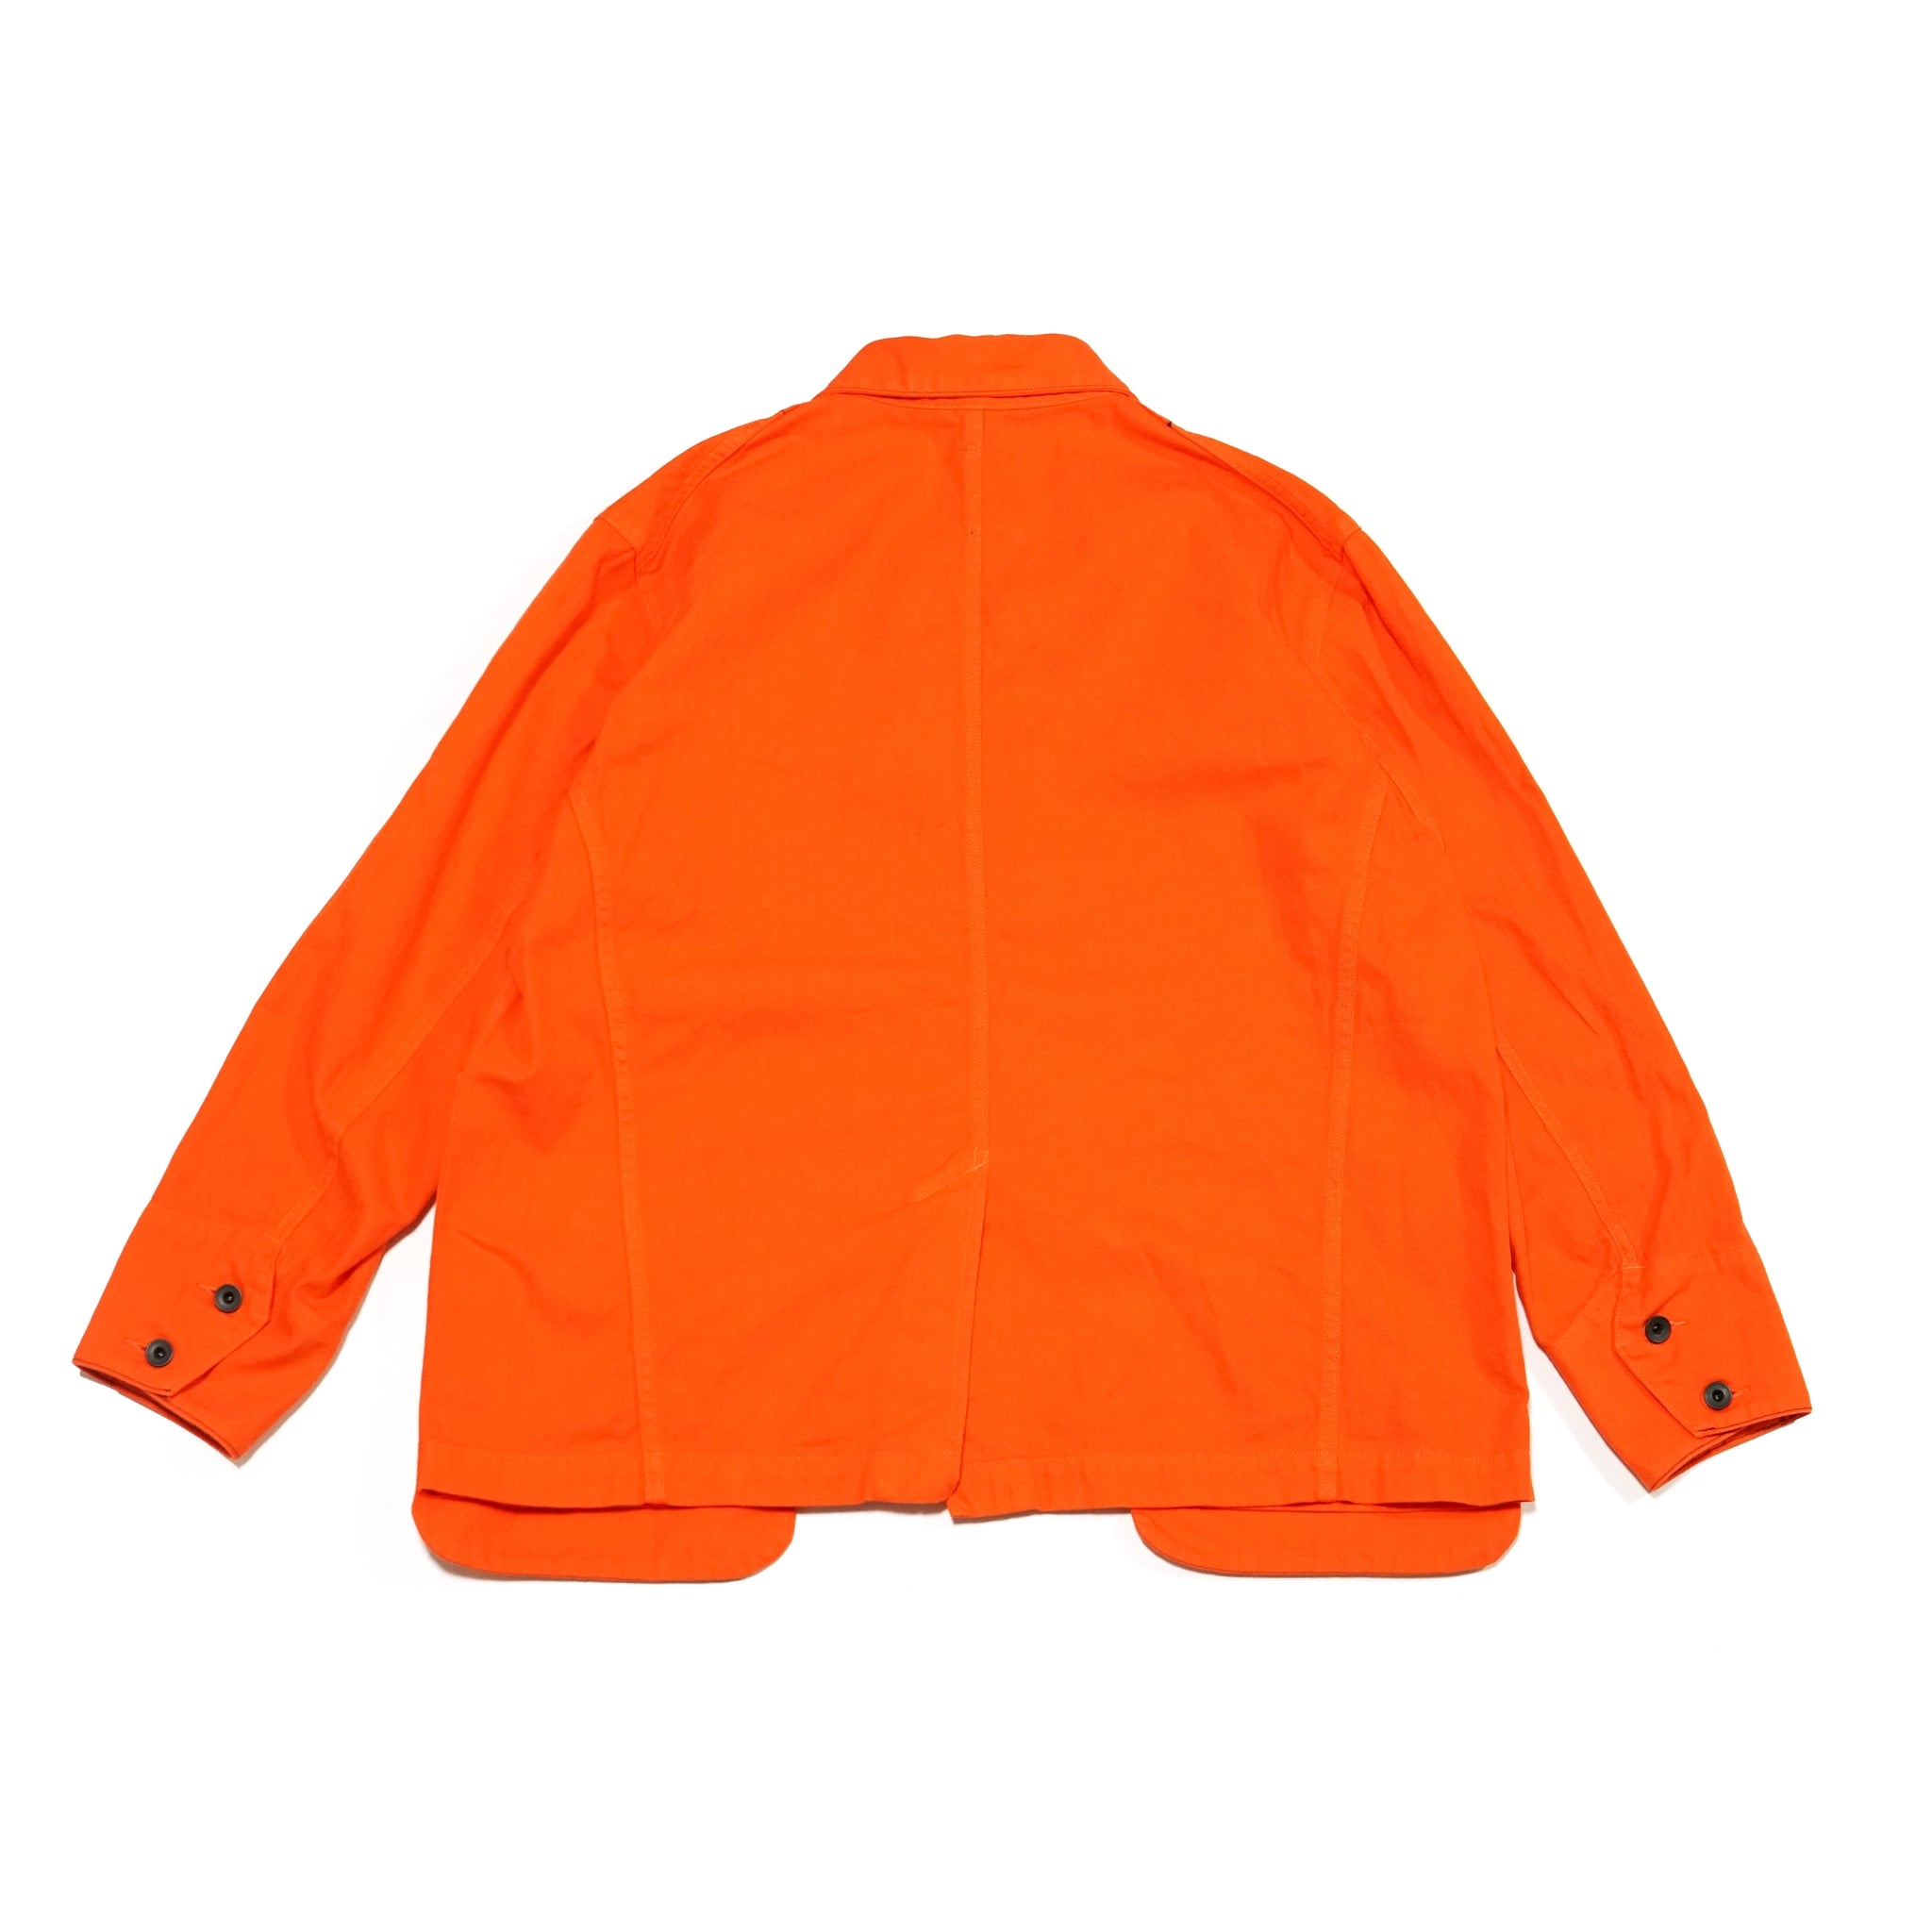 No:VOO-1109 | Name:The Covooall | Color:Orange/Black【VOO_ヴォー】